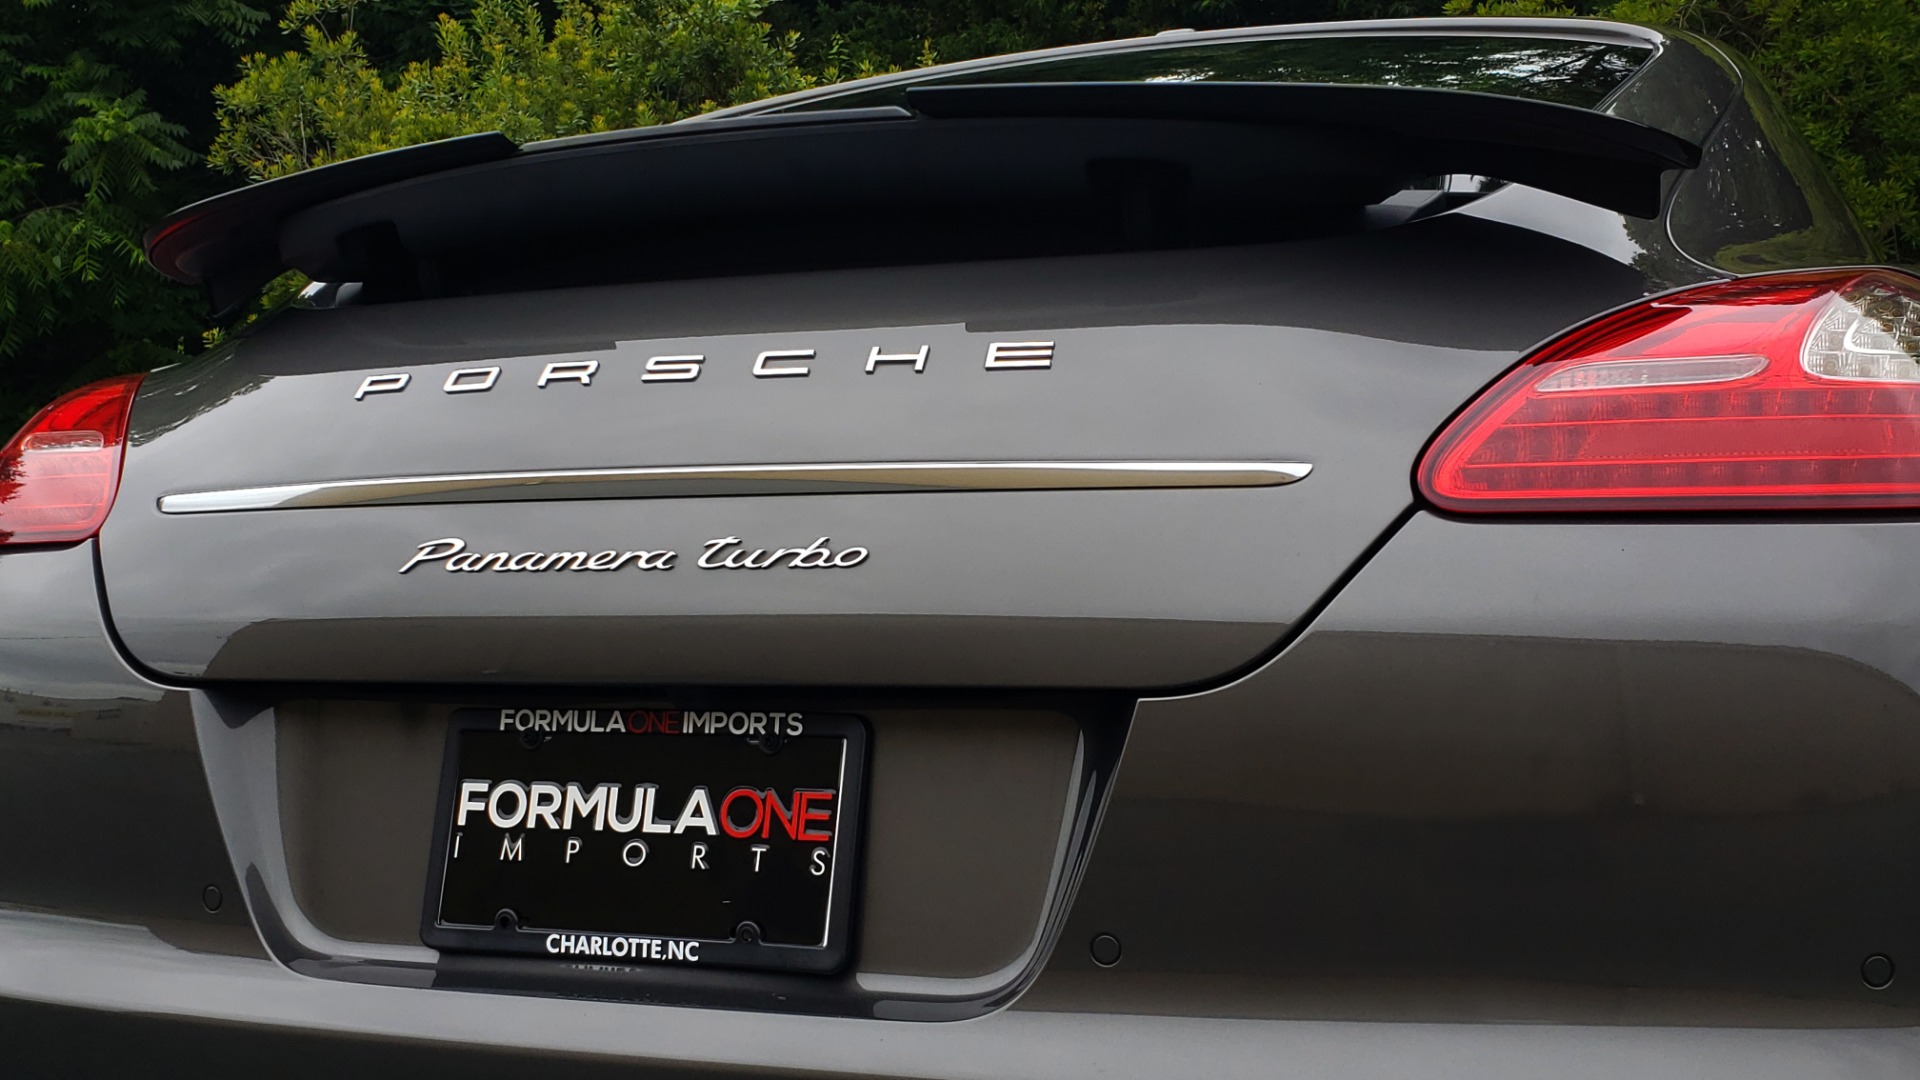 Used 2013 Porsche PANAMERA TURBO 4.8L V8 / AWD / NAV / SUNROOF / LCA / PARK ASST / BURMESTER for sale Sold at Formula Imports in Charlotte NC 28227 28